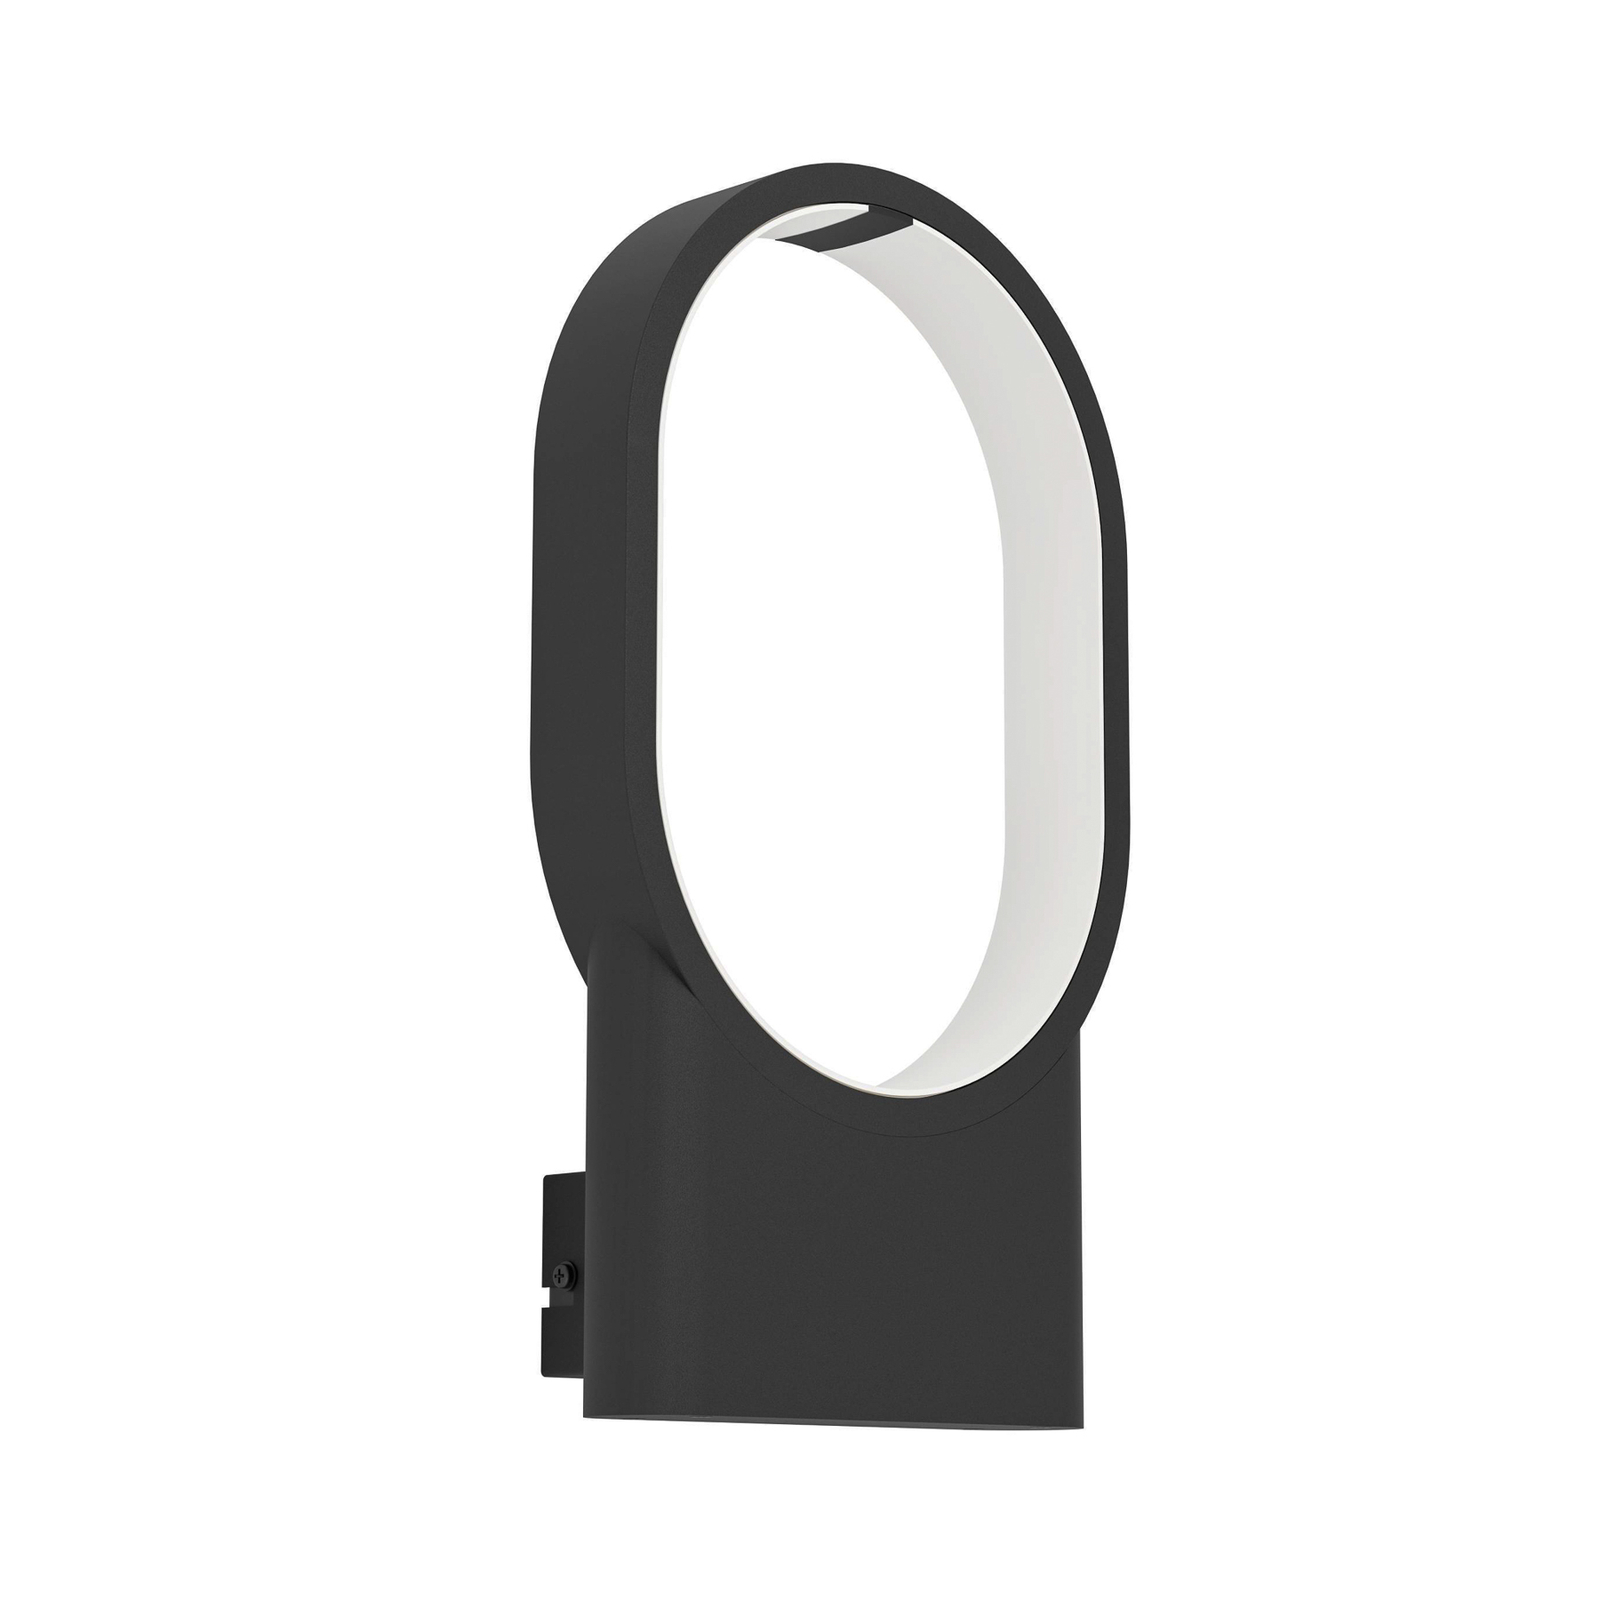 LED-vägglampa Codriales i svart